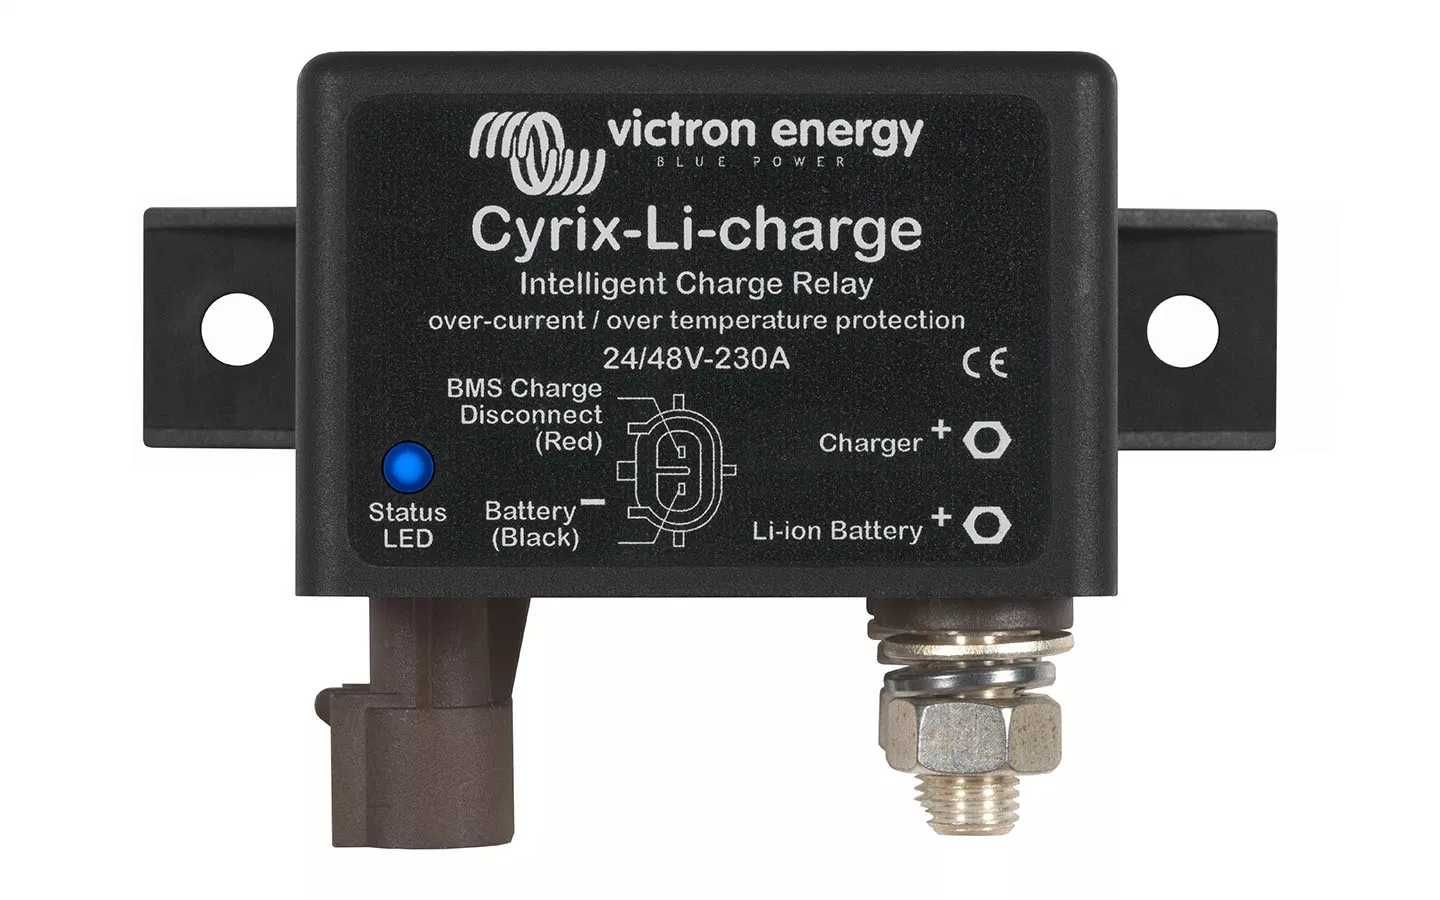 Cyrix-Li-Charge 24/48V-230A Victron